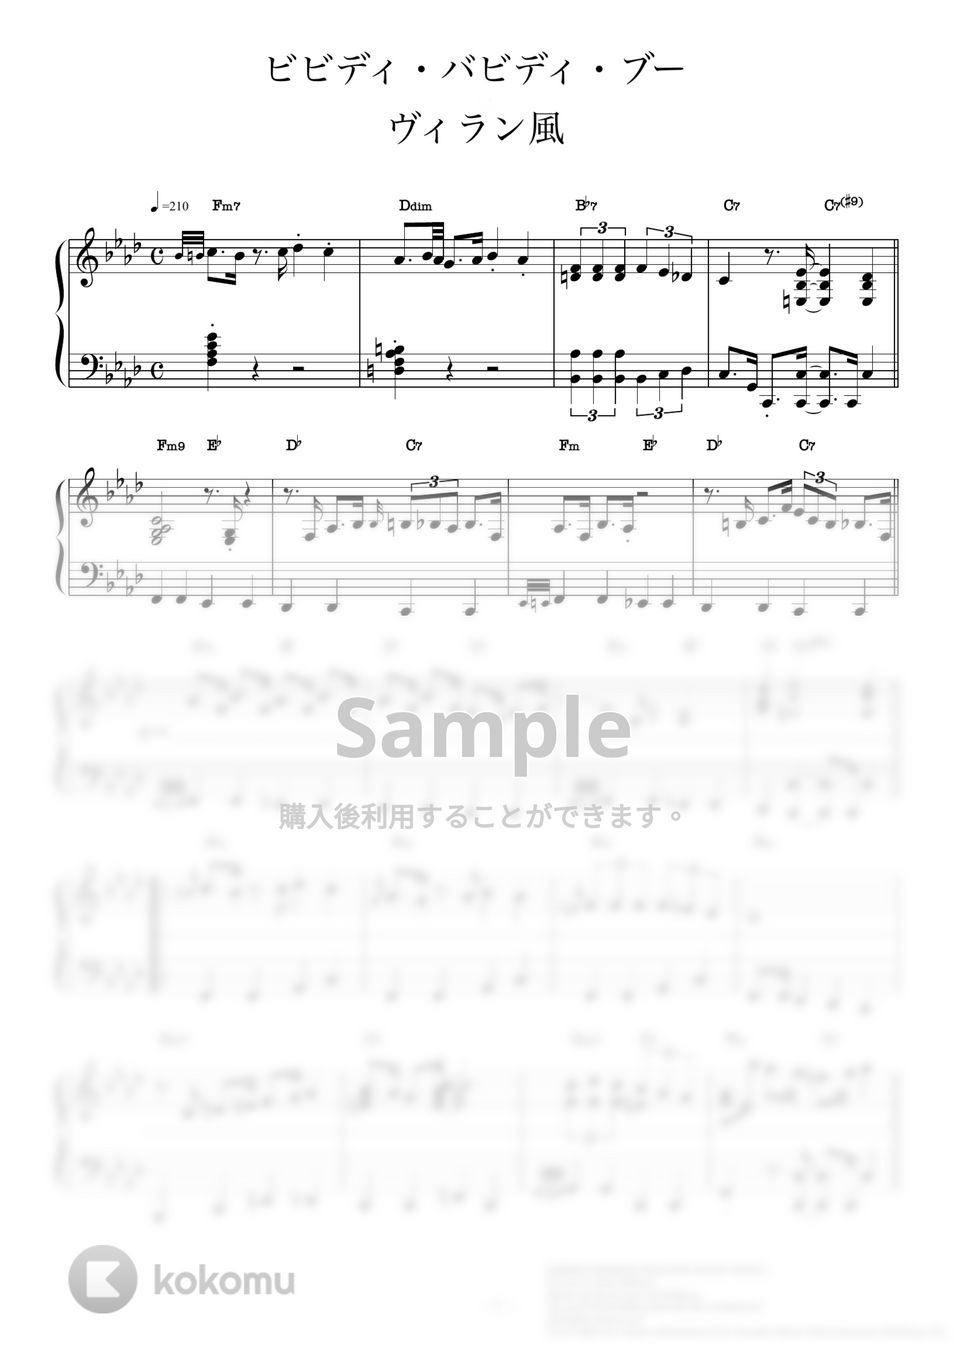 DAVID MACK - シンデレラ「ビビディバビディブー」ヴィラン風アレンジ (ピアノソロ / ヴィラン風 / コード有) by CAFUNE